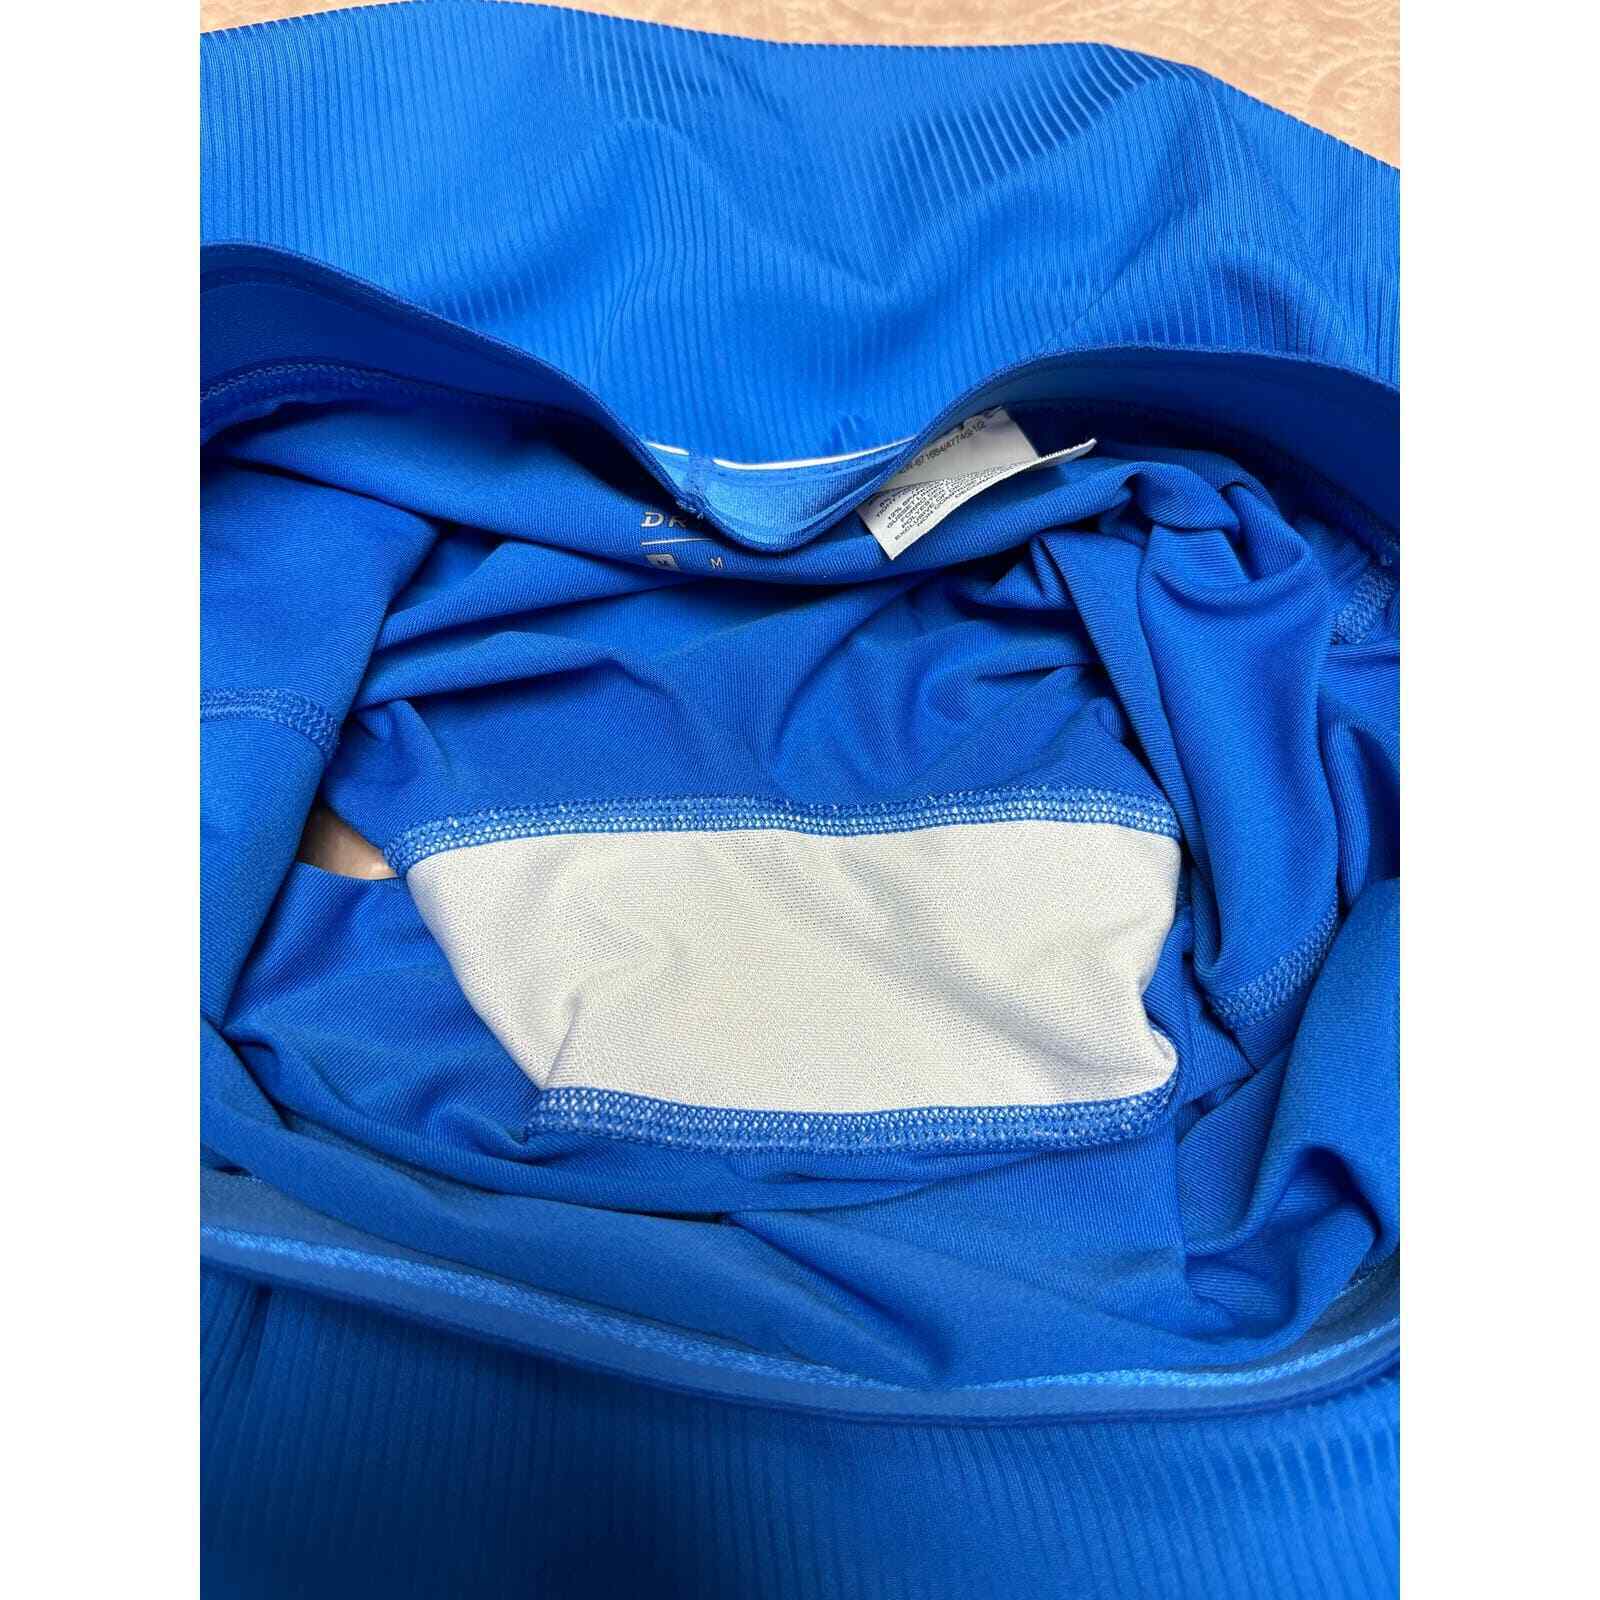 Nike tennis flouncy dri-fit blue skirt skort size… - image 6